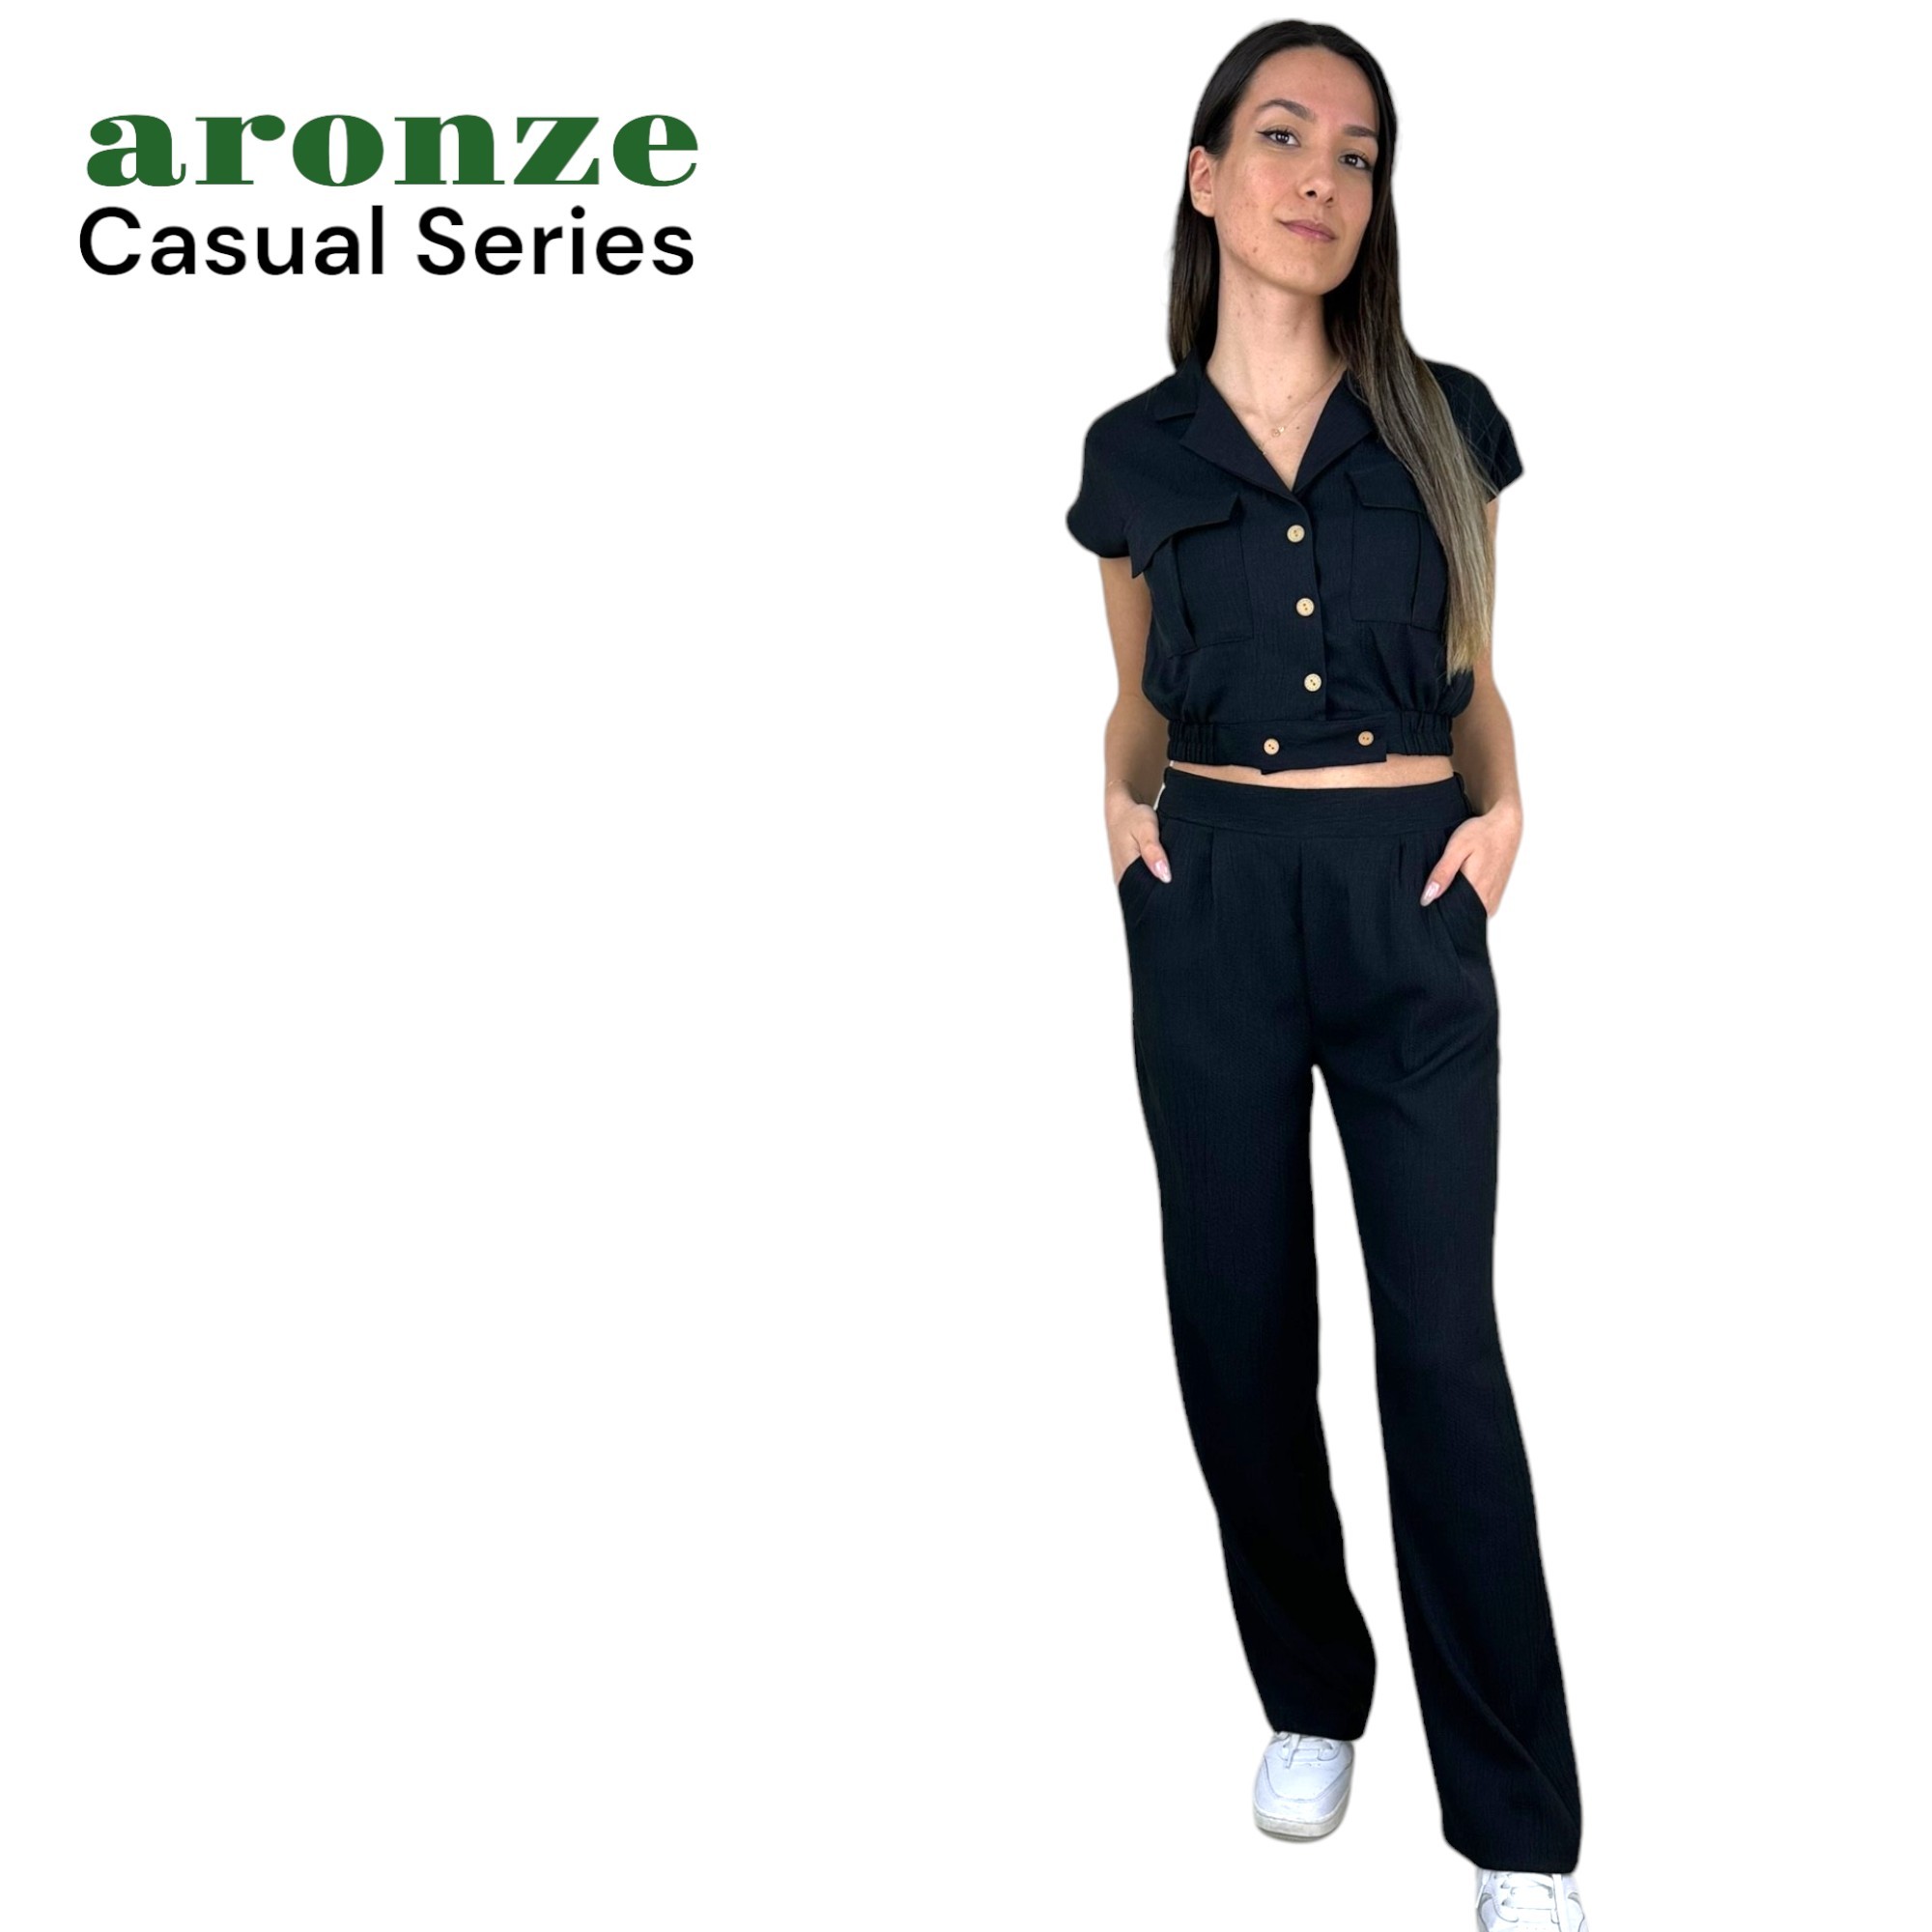 Aronze Casual Series %100 Organik Türk Pamuğu Crop Pantolon Siyah Renk Takım